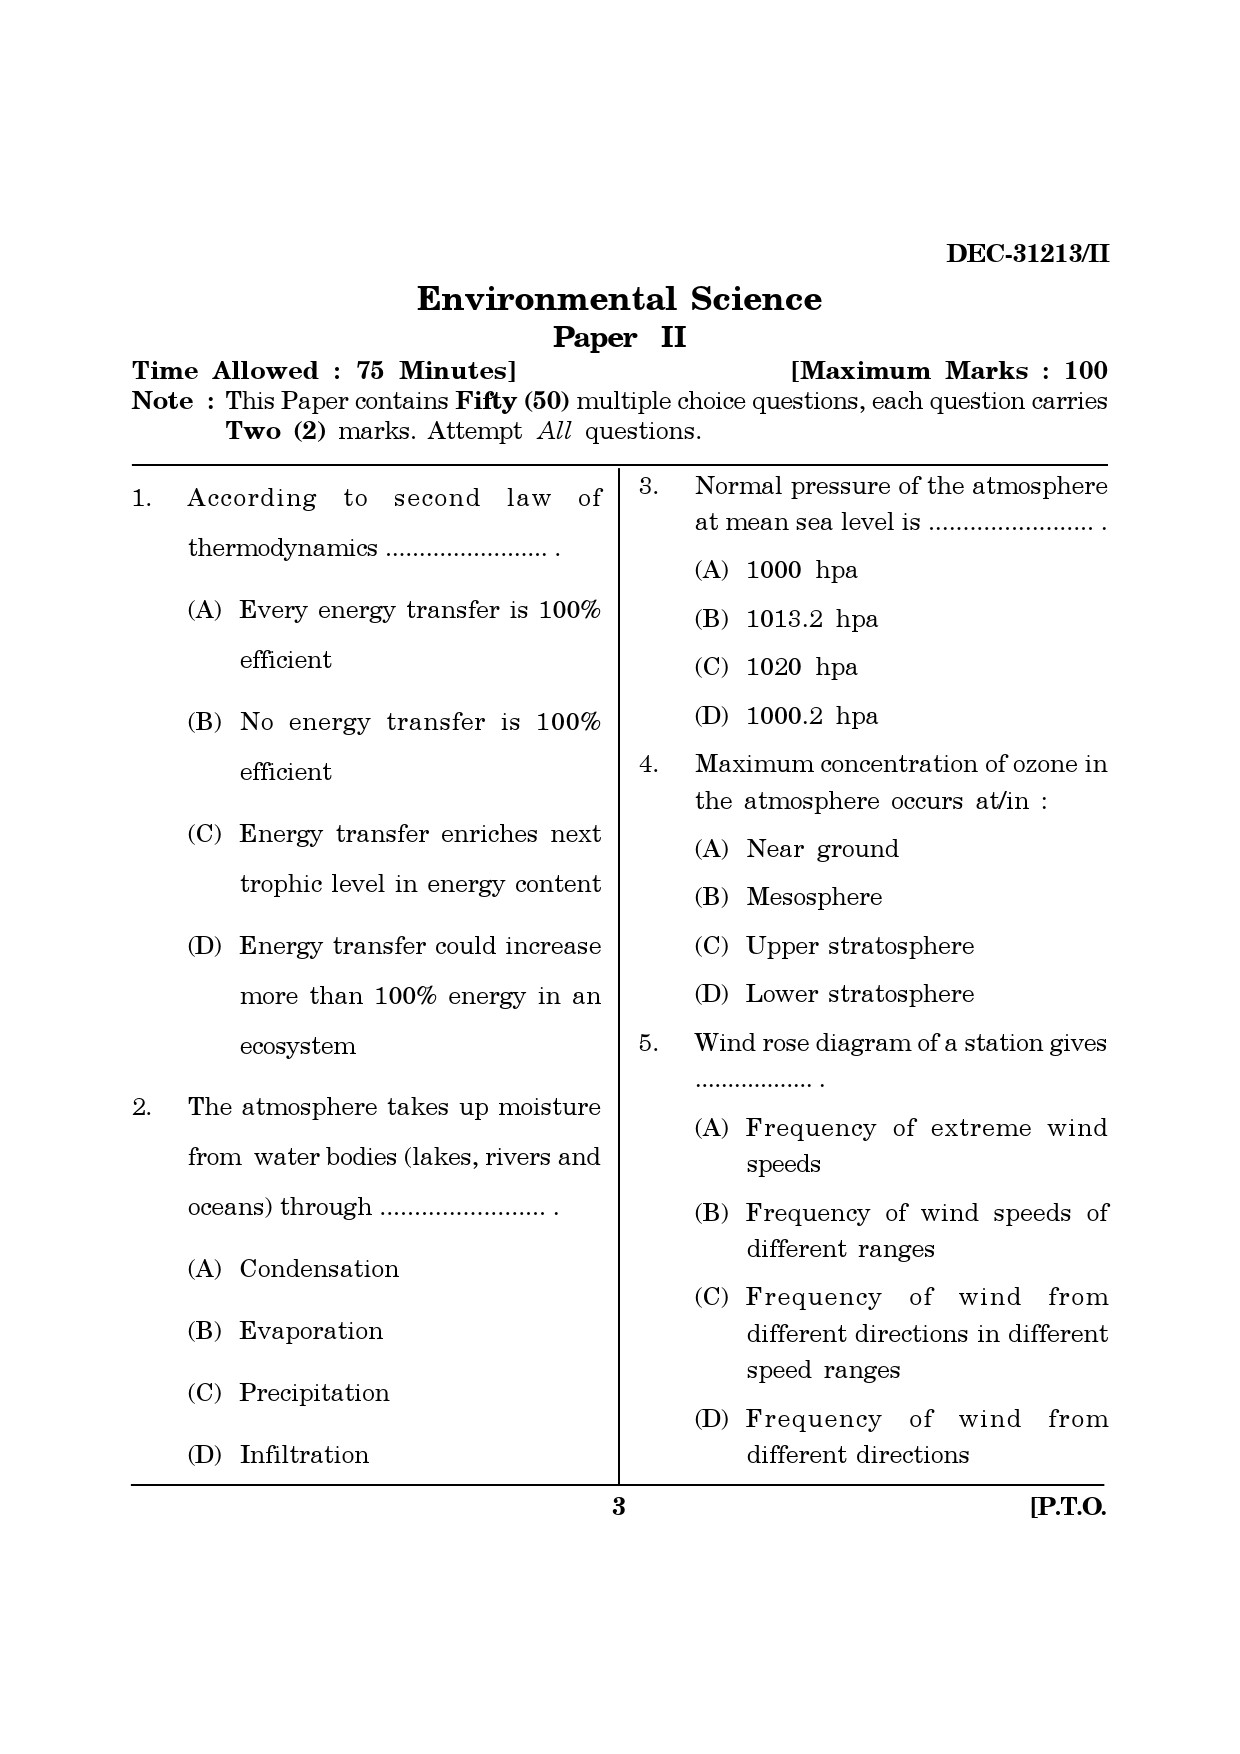 Maharashtra SET Environmental Sciences Question Paper II December 2013 2